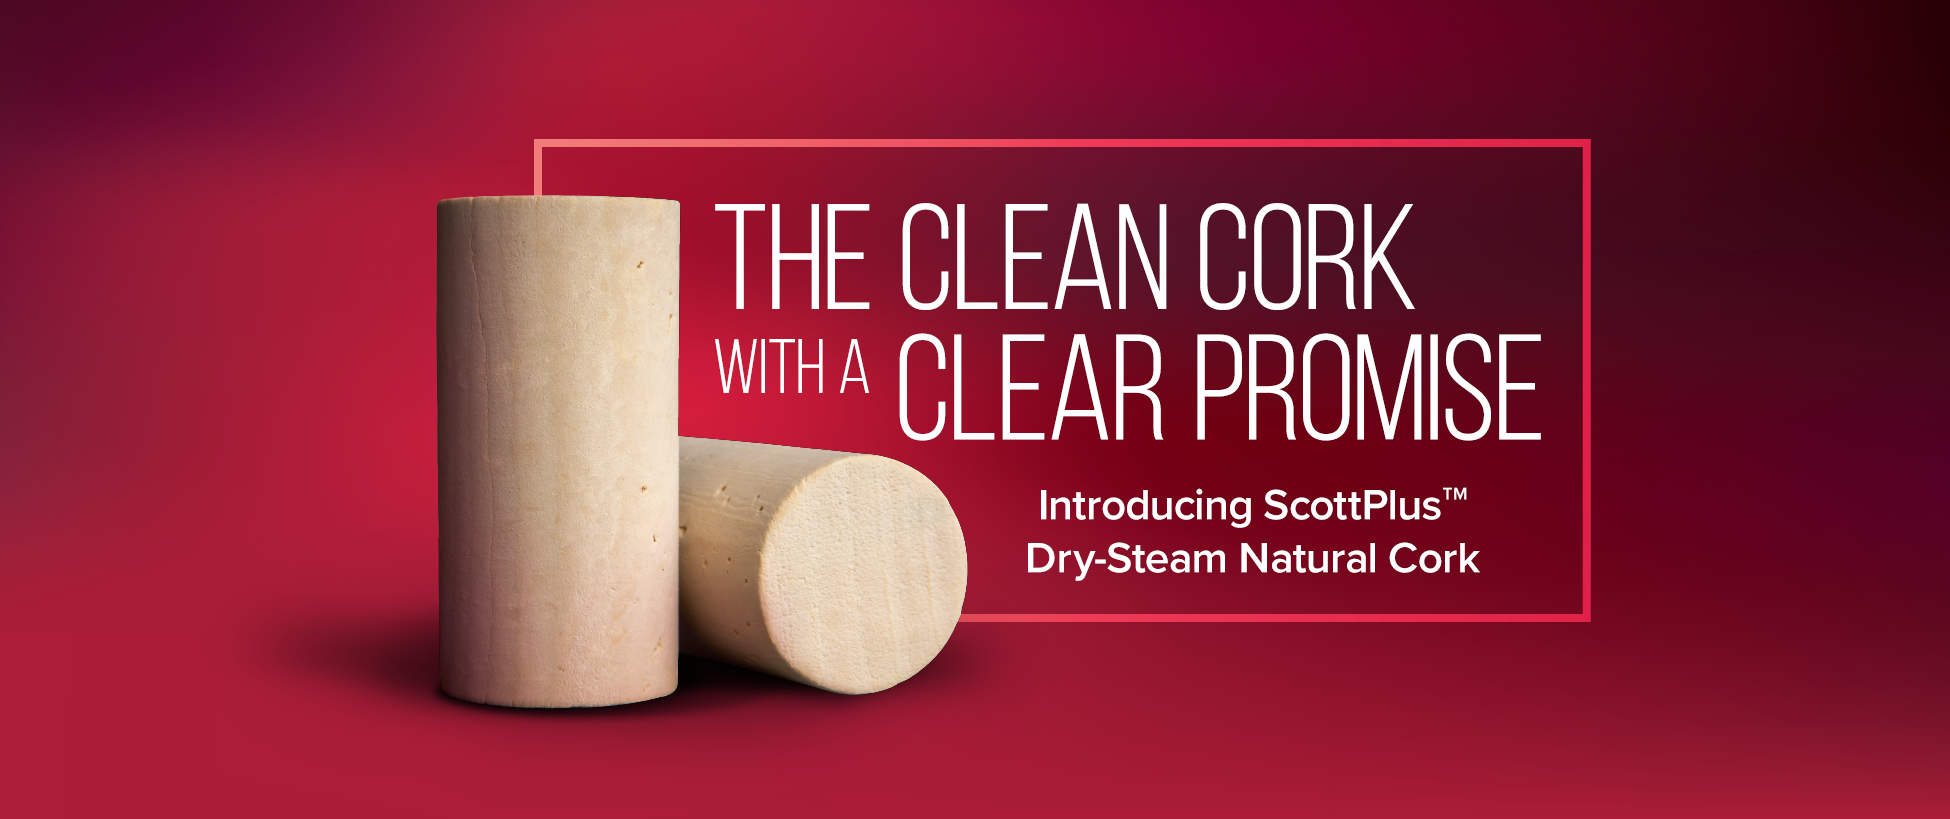 Scott Plus Cork: A Clean Cork with a Clear Promise